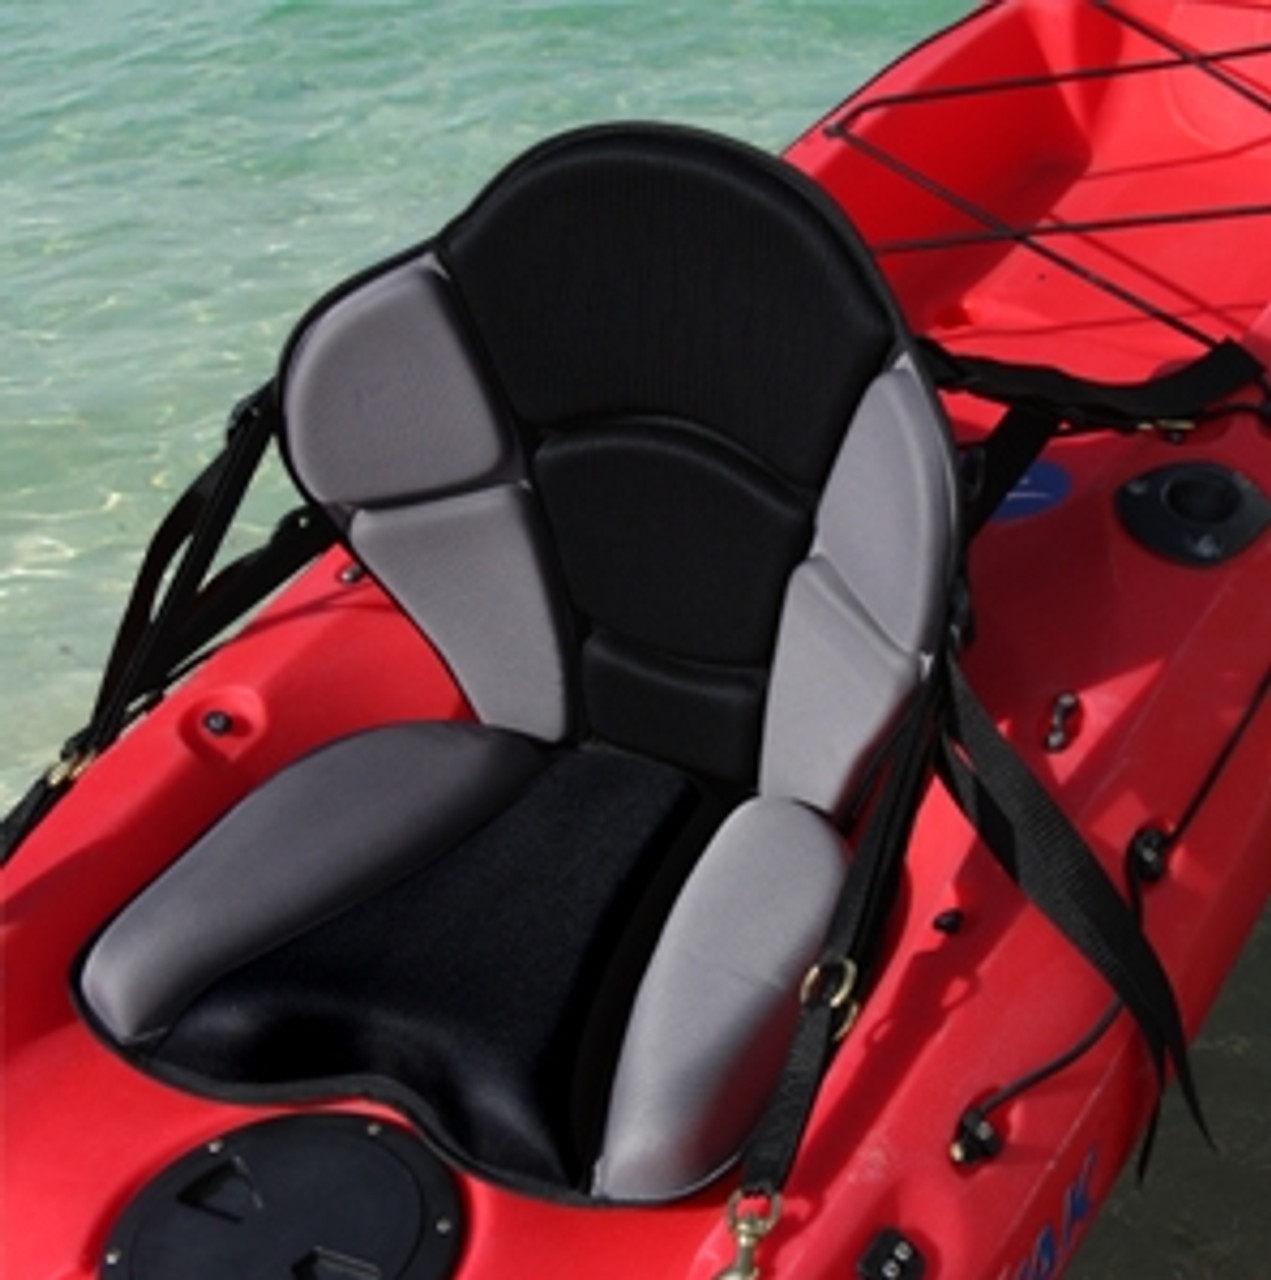 GTS Pro Molded Foam Sit On Top Kayak Seat